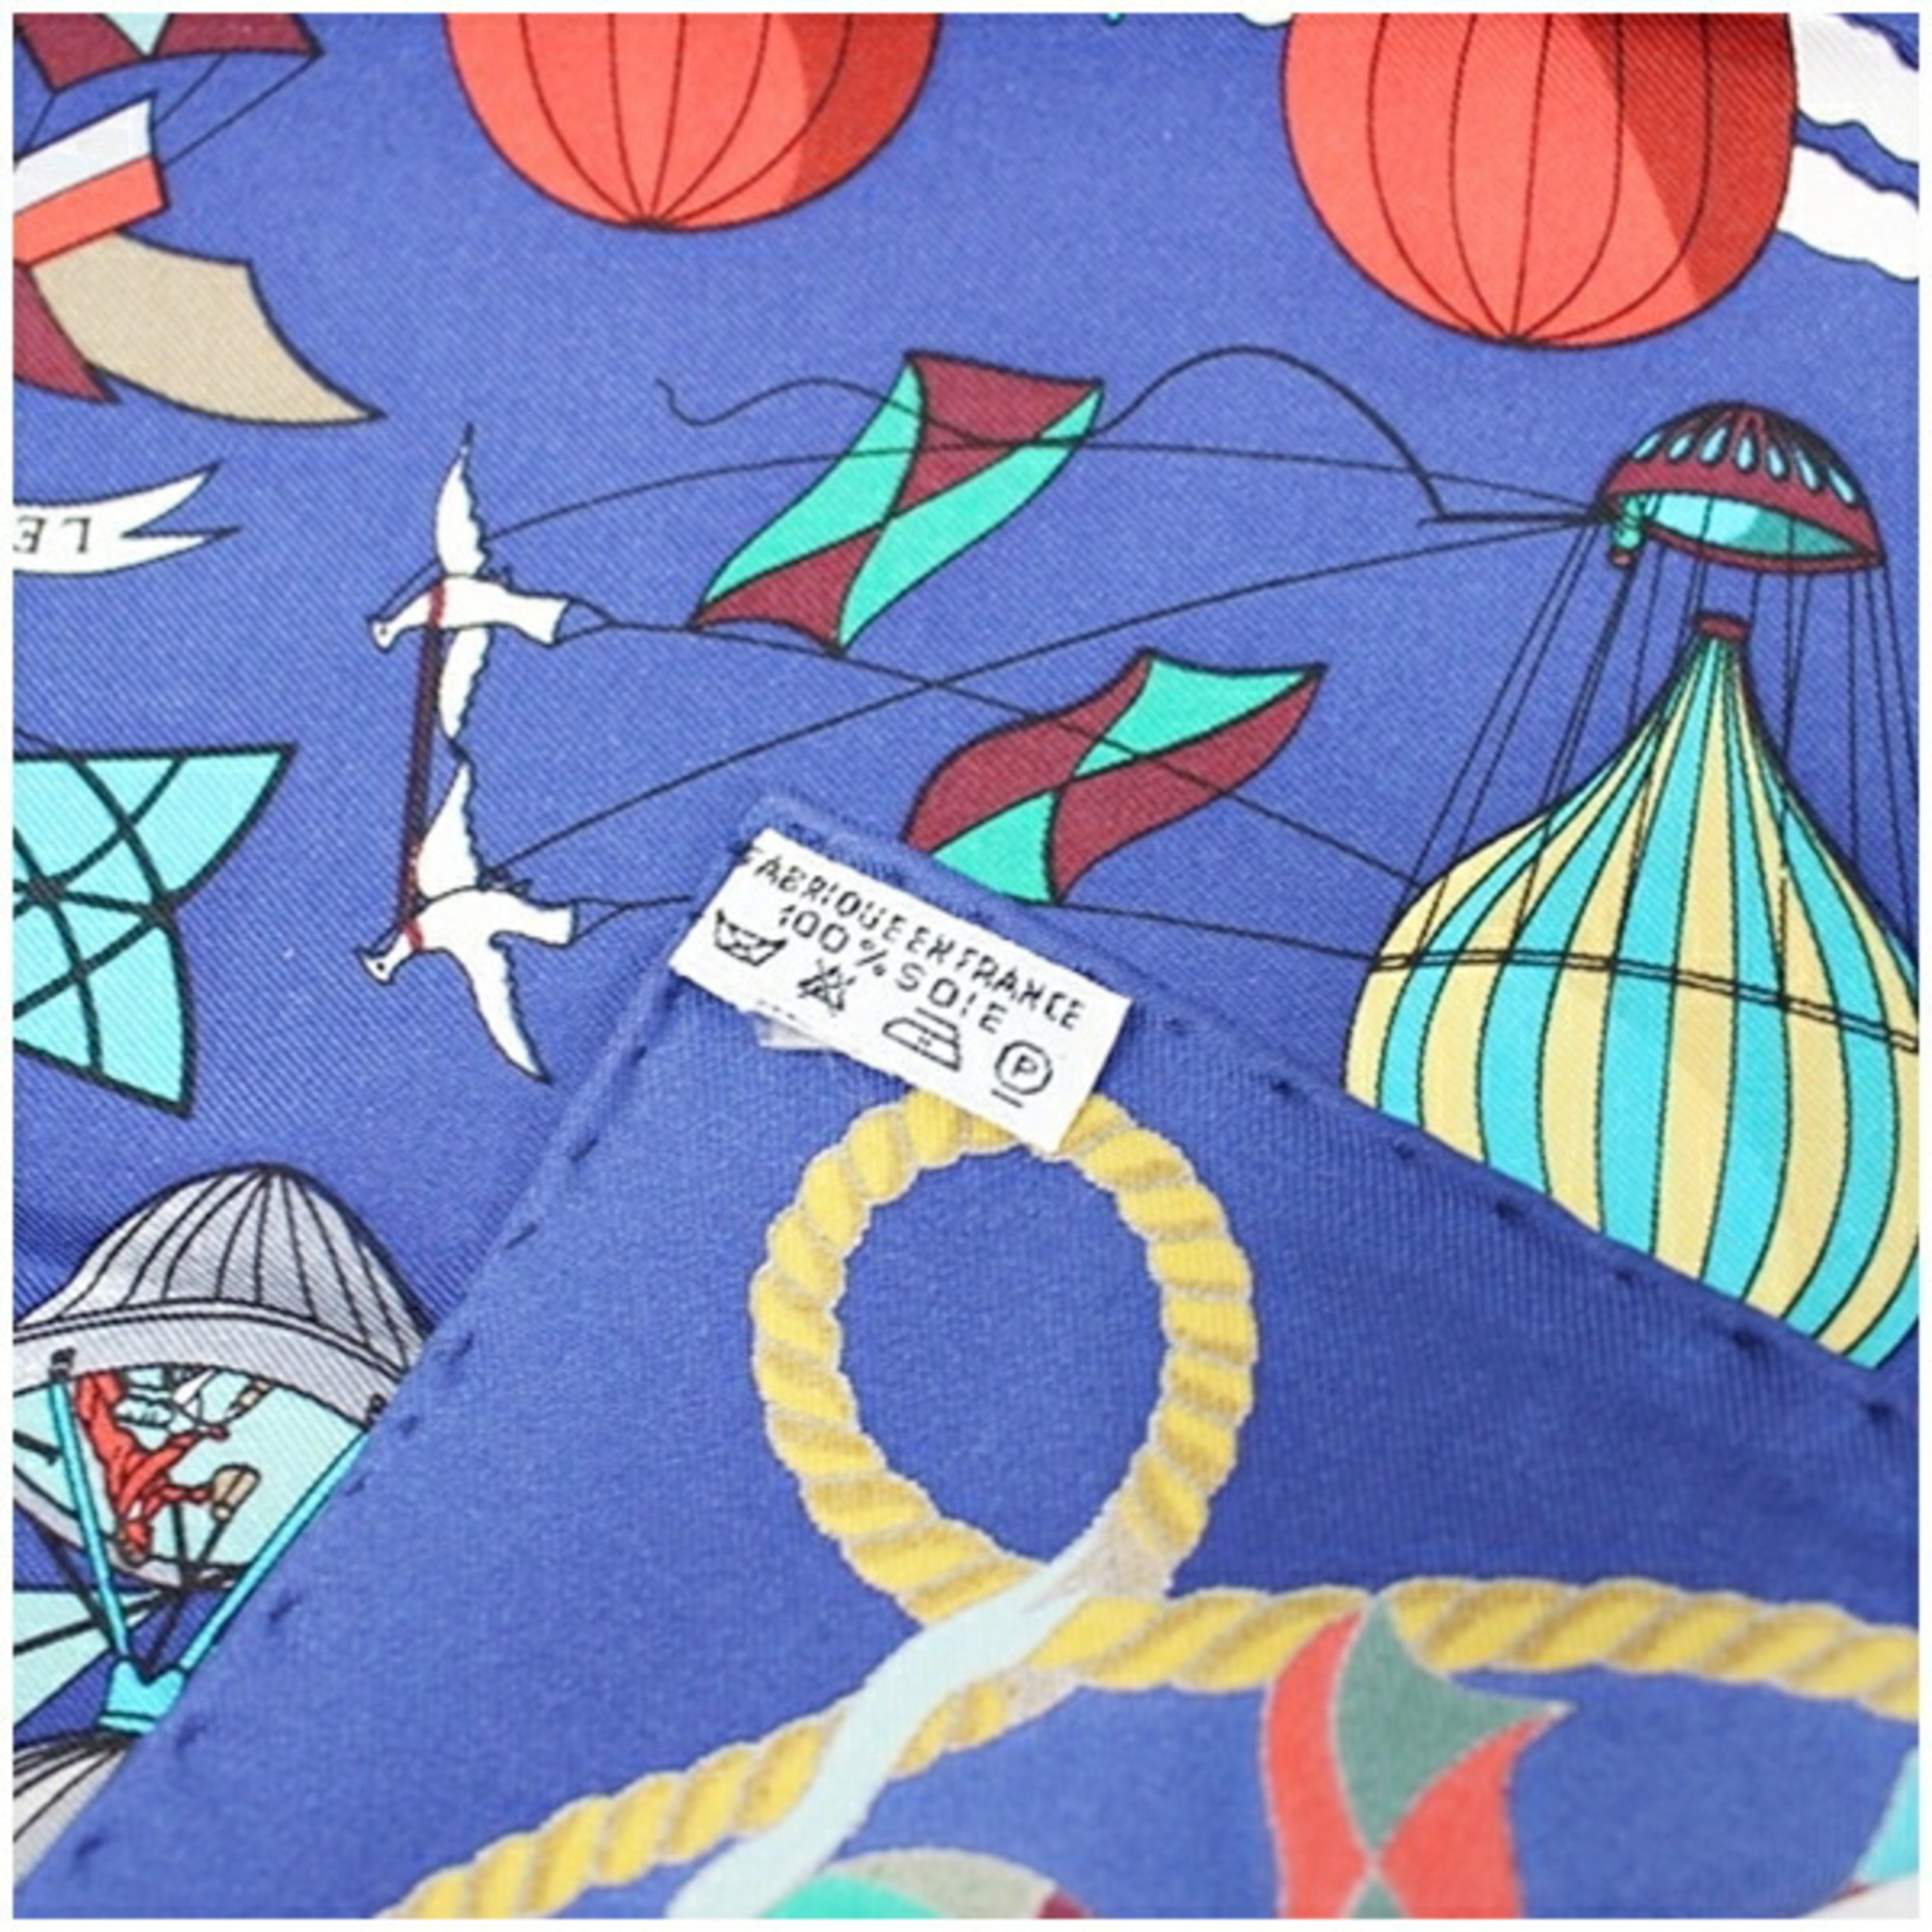 Hermes Silk Scarf Muffler Gauroche Carre 45 "LES FOLIESDUCIEL" Madness of the Sky Blue Balloon Pattern HERMES Women's